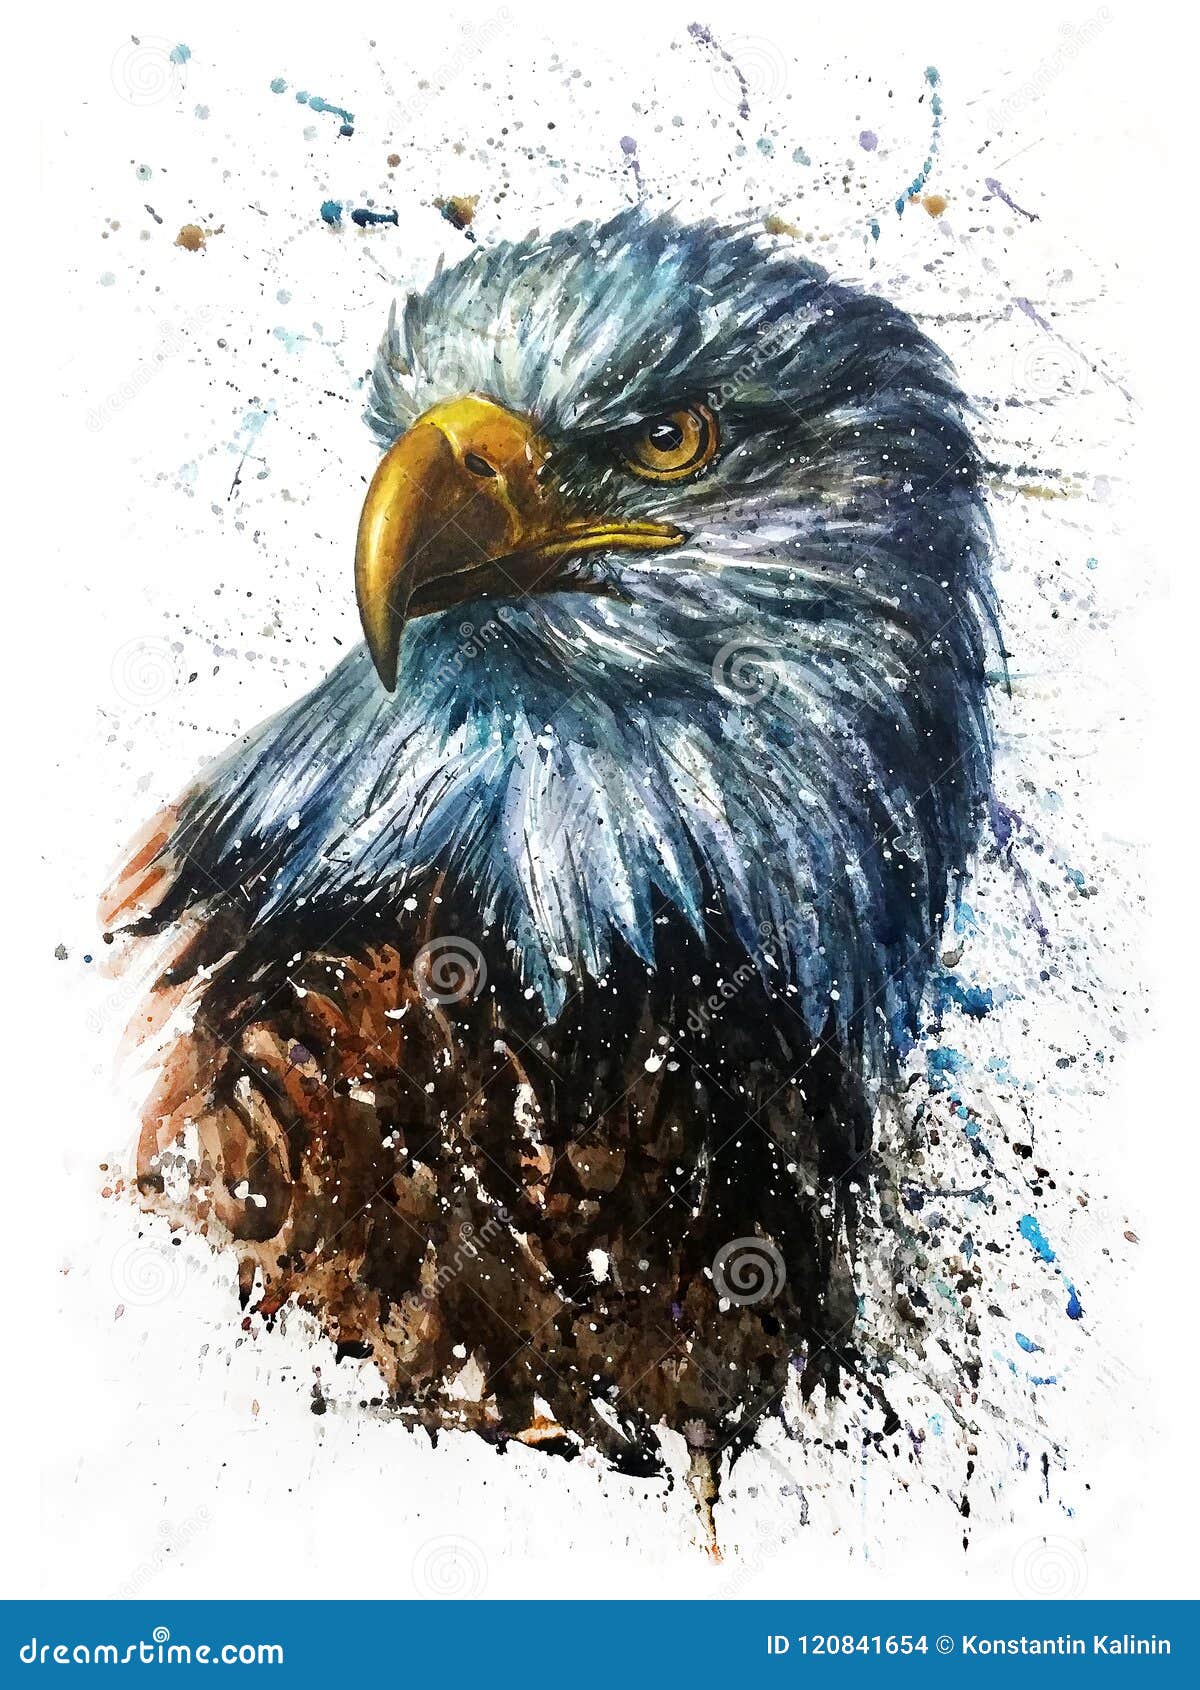 american eagle watercolor predator wildlife painting